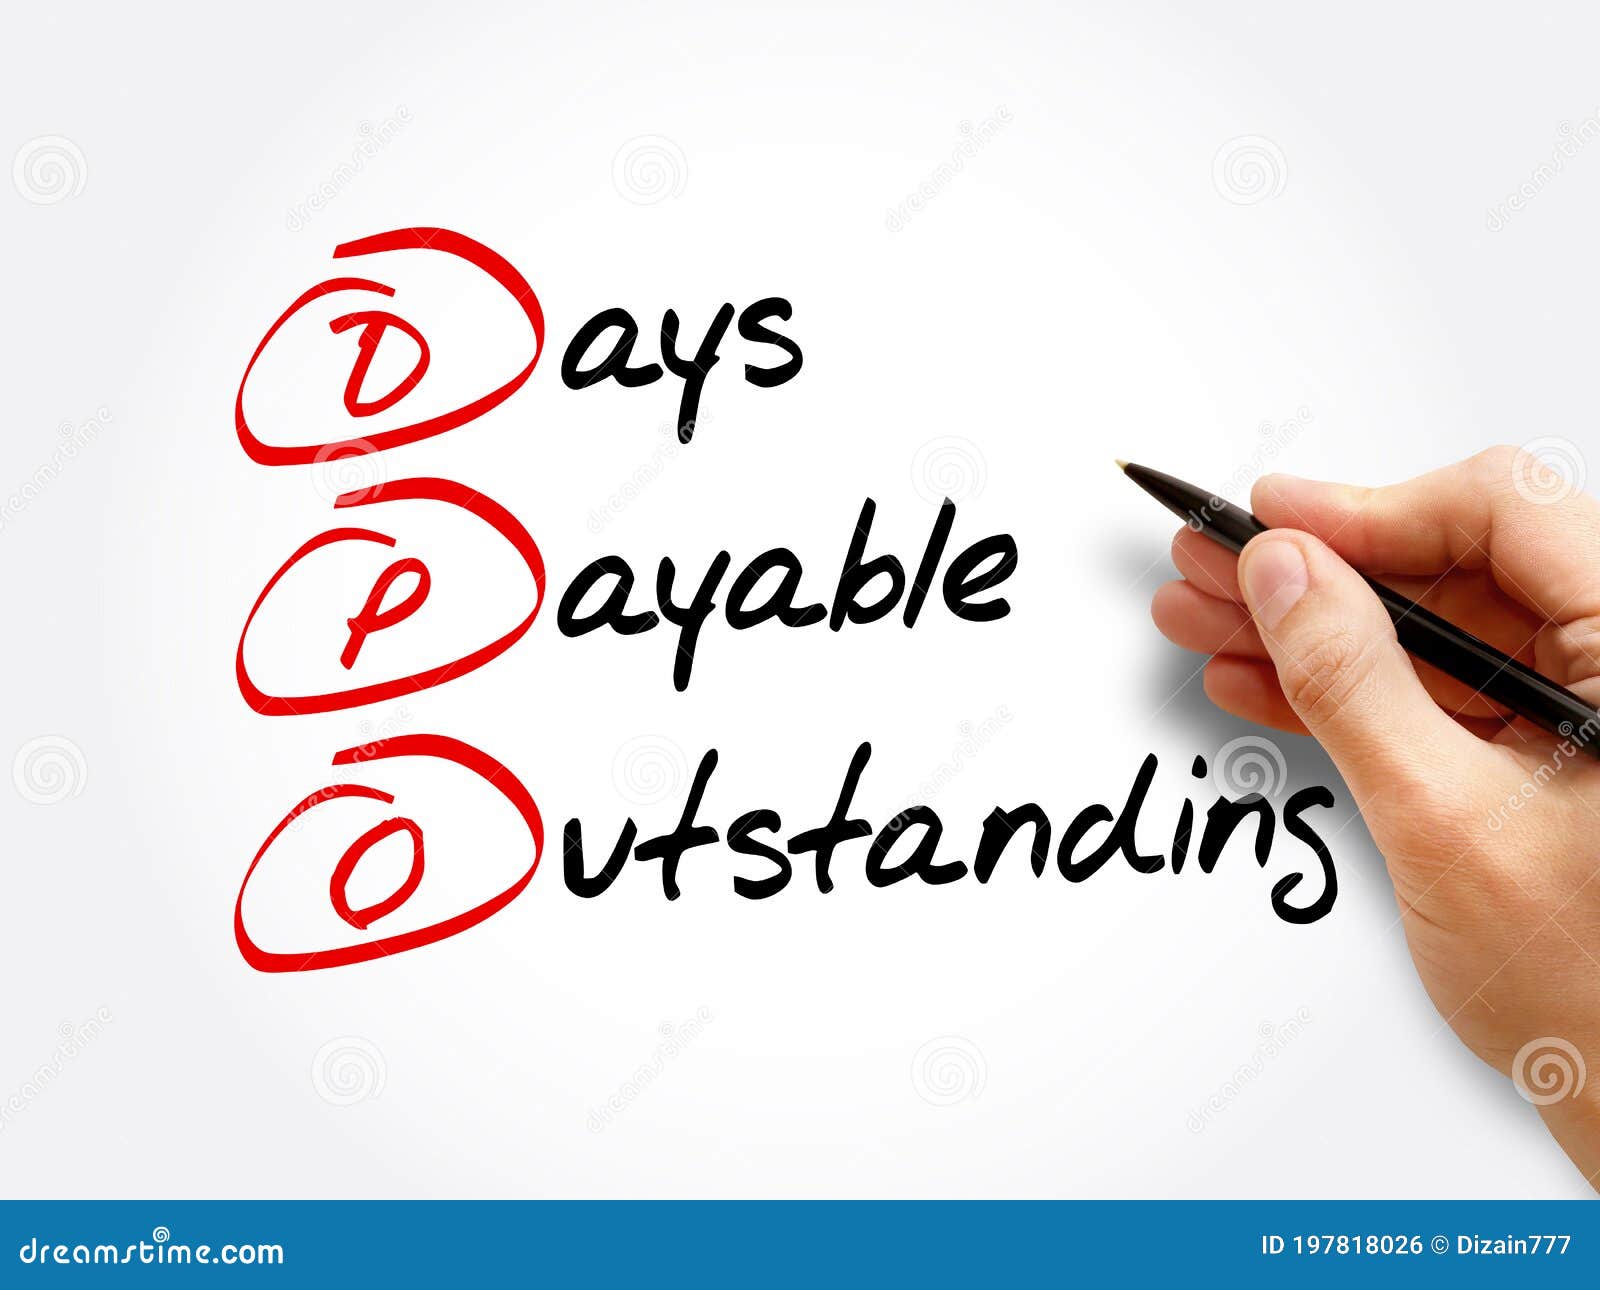 dpo - days payable outstanding acronym